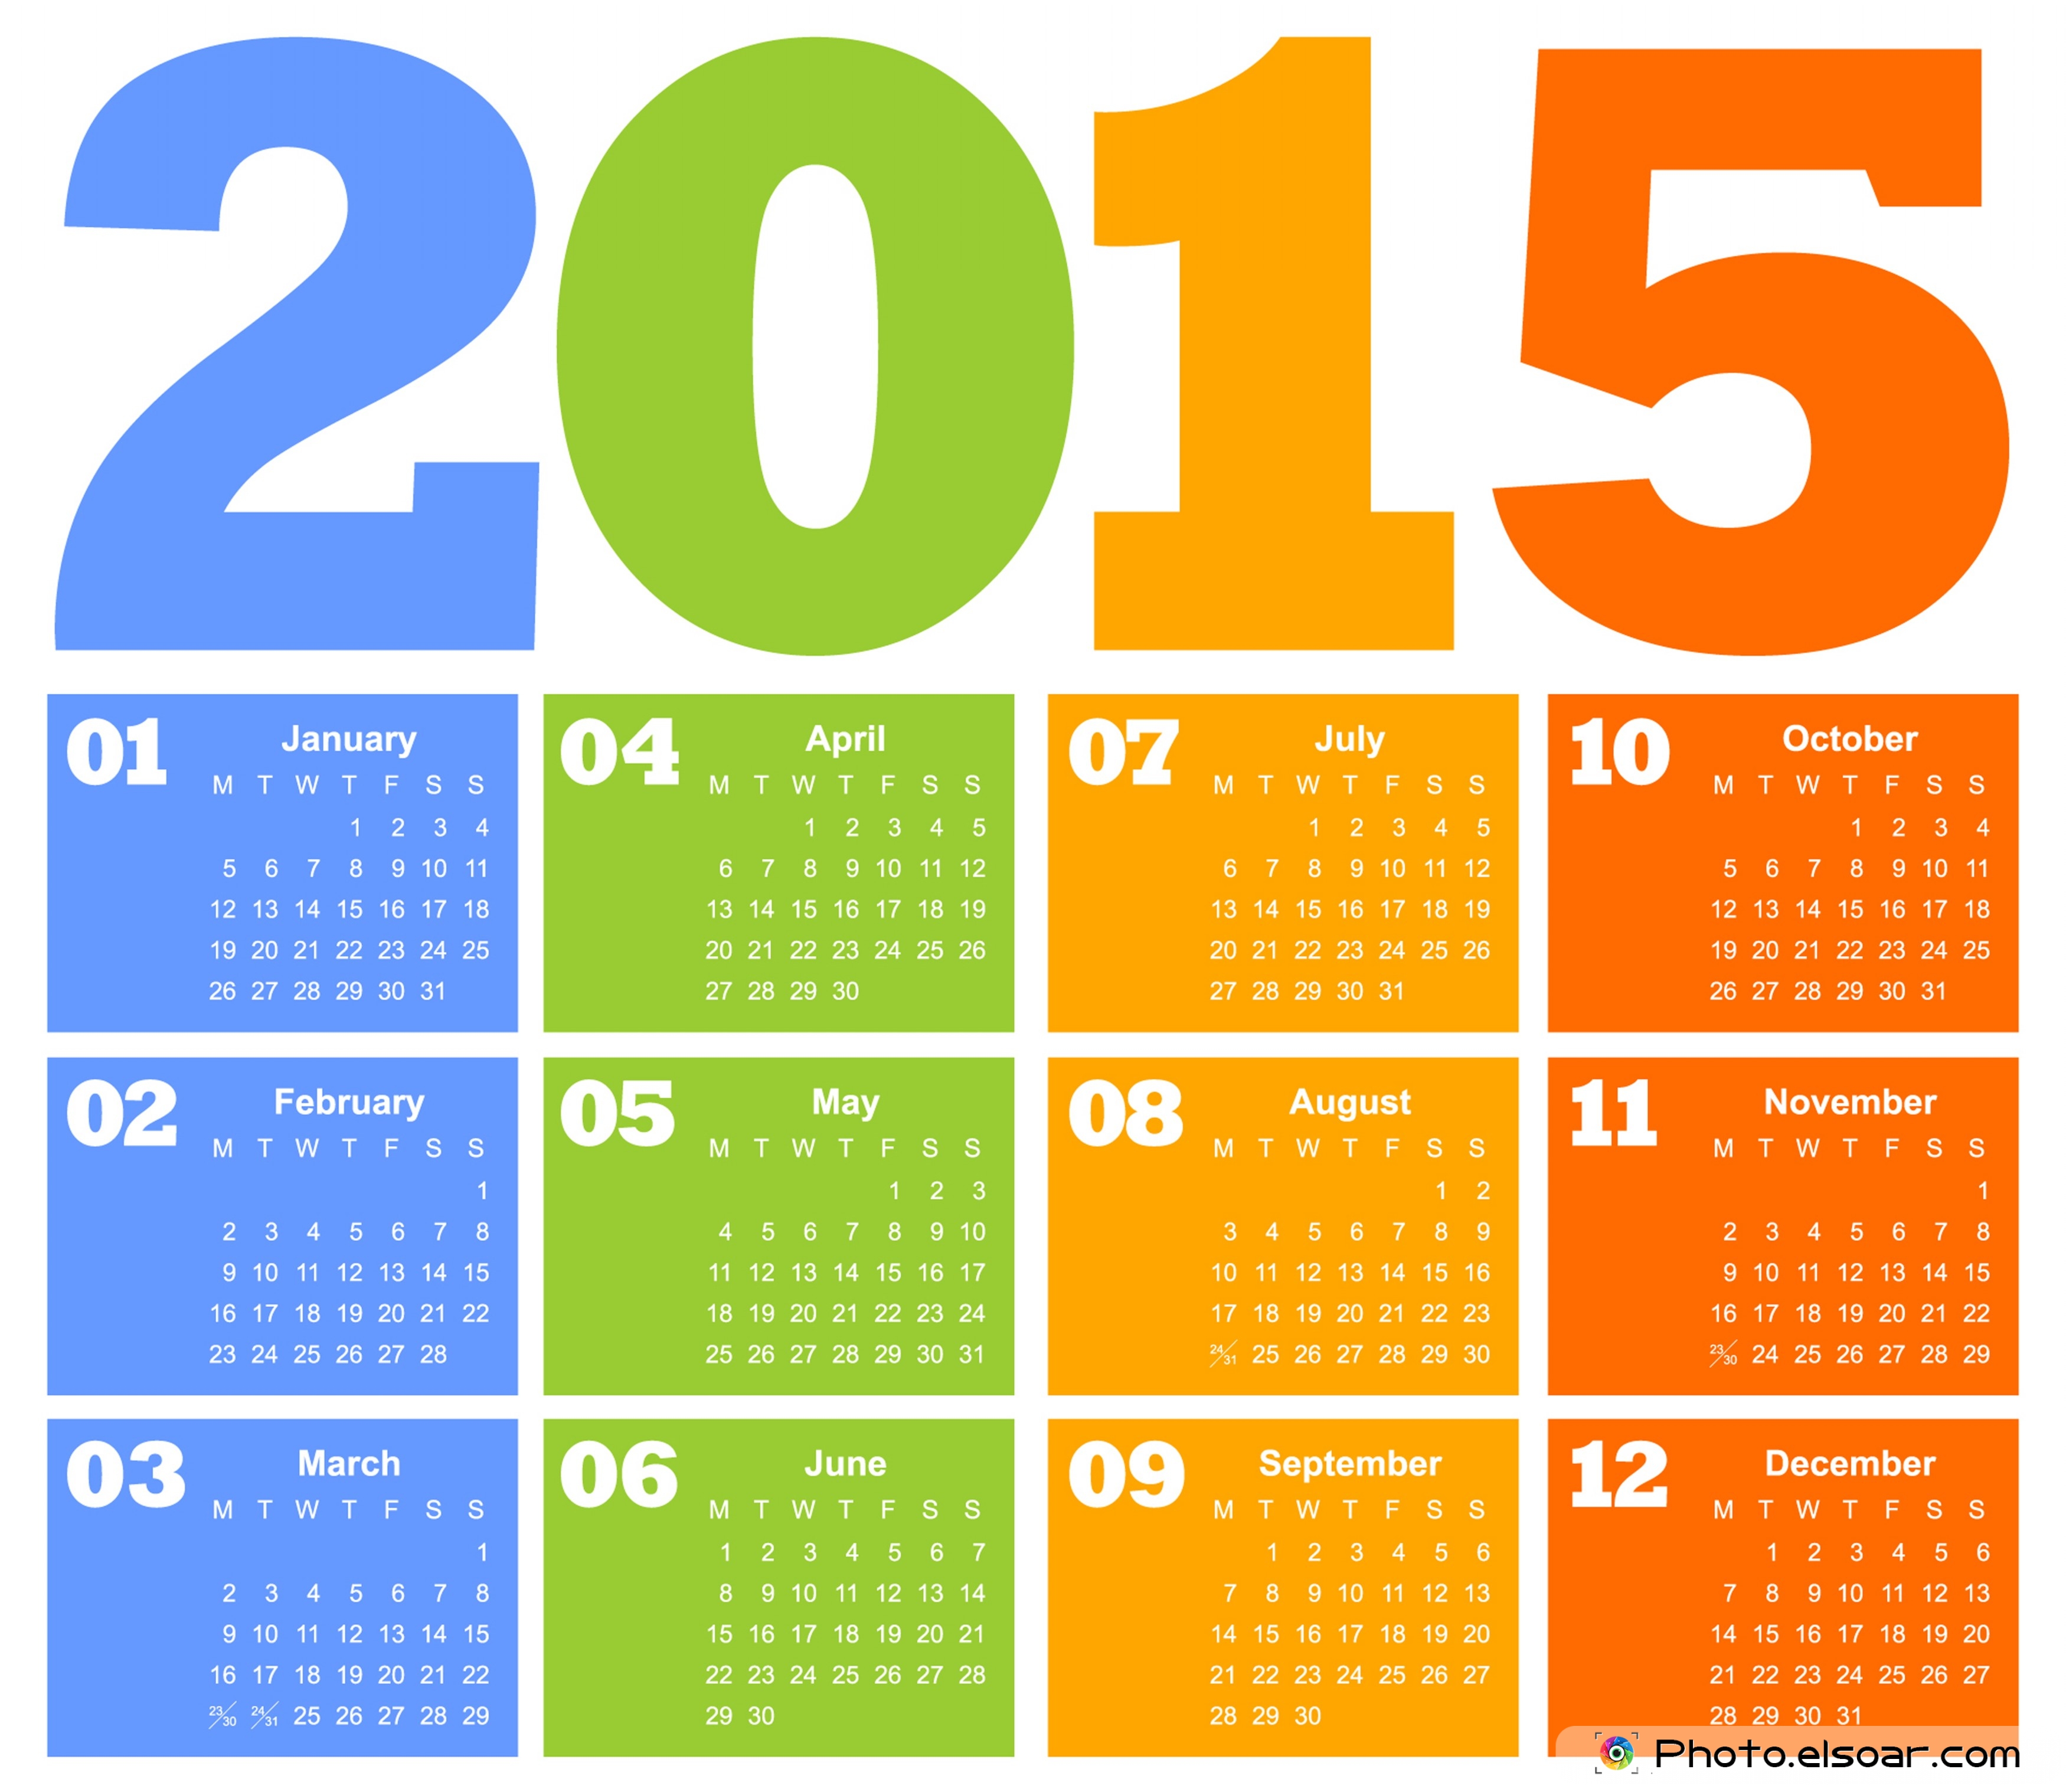 2015 Calendar